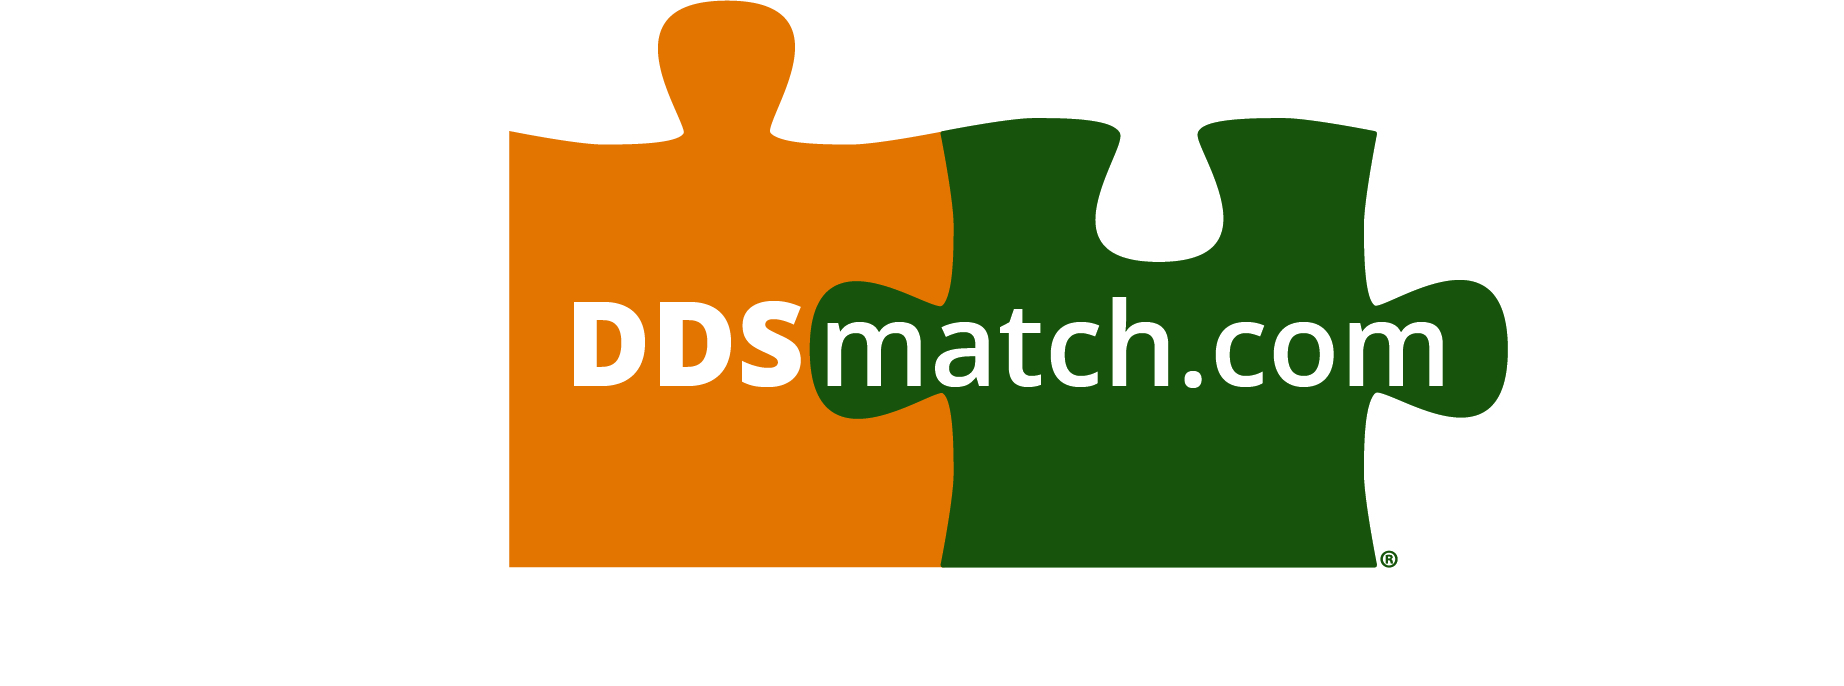 ddsmatch.com - Ryan LaPrad Logo